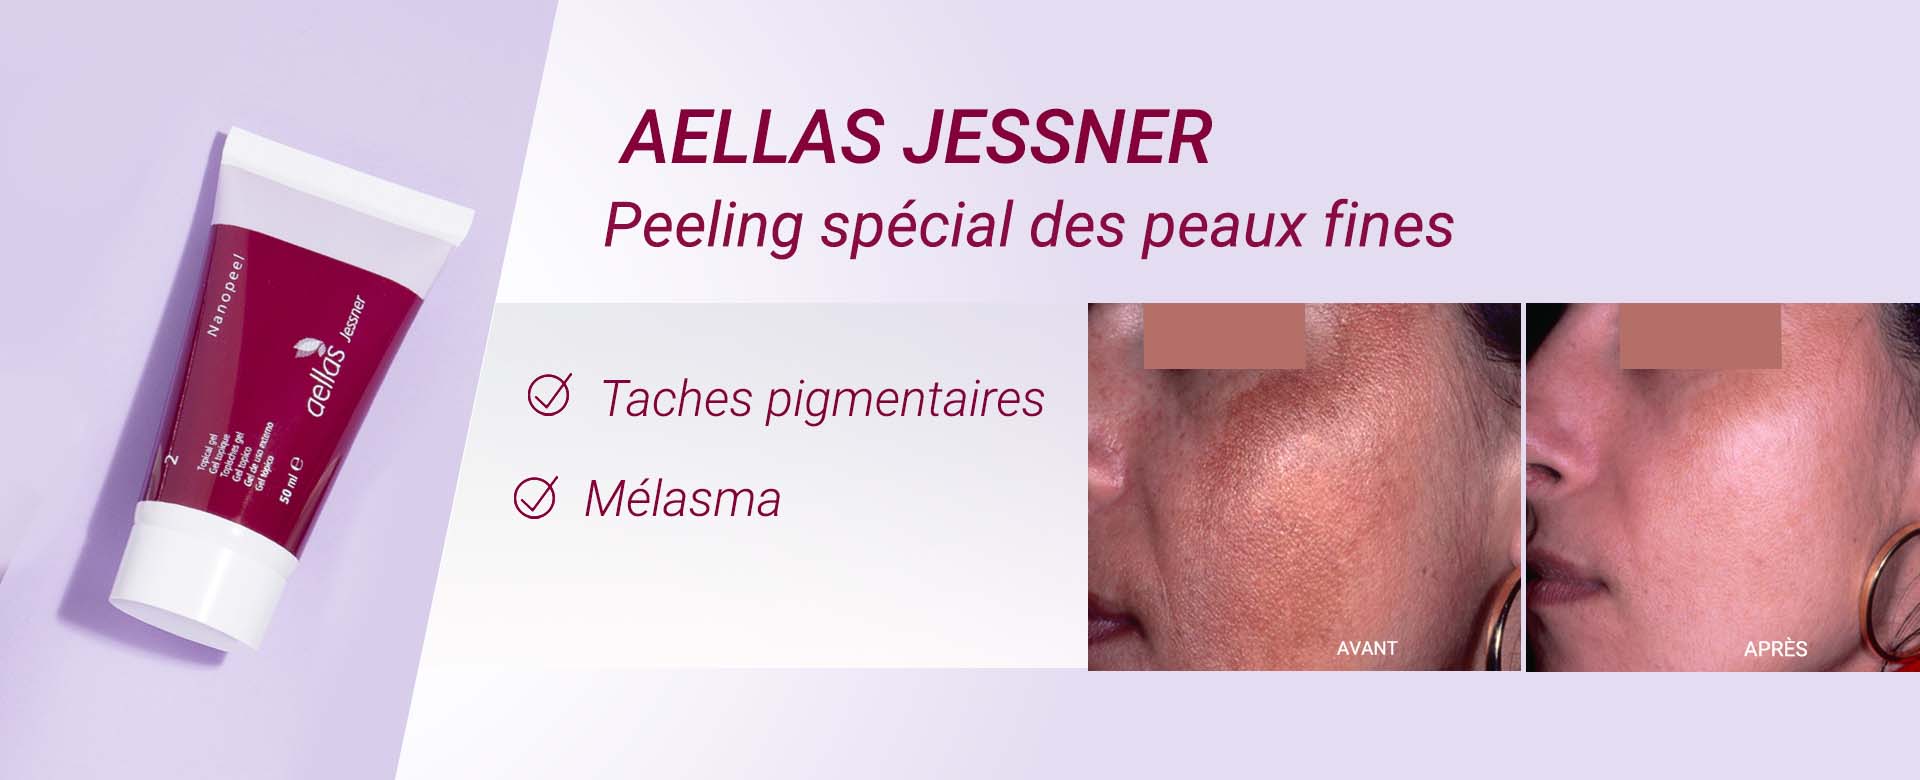 Aellas Jessner